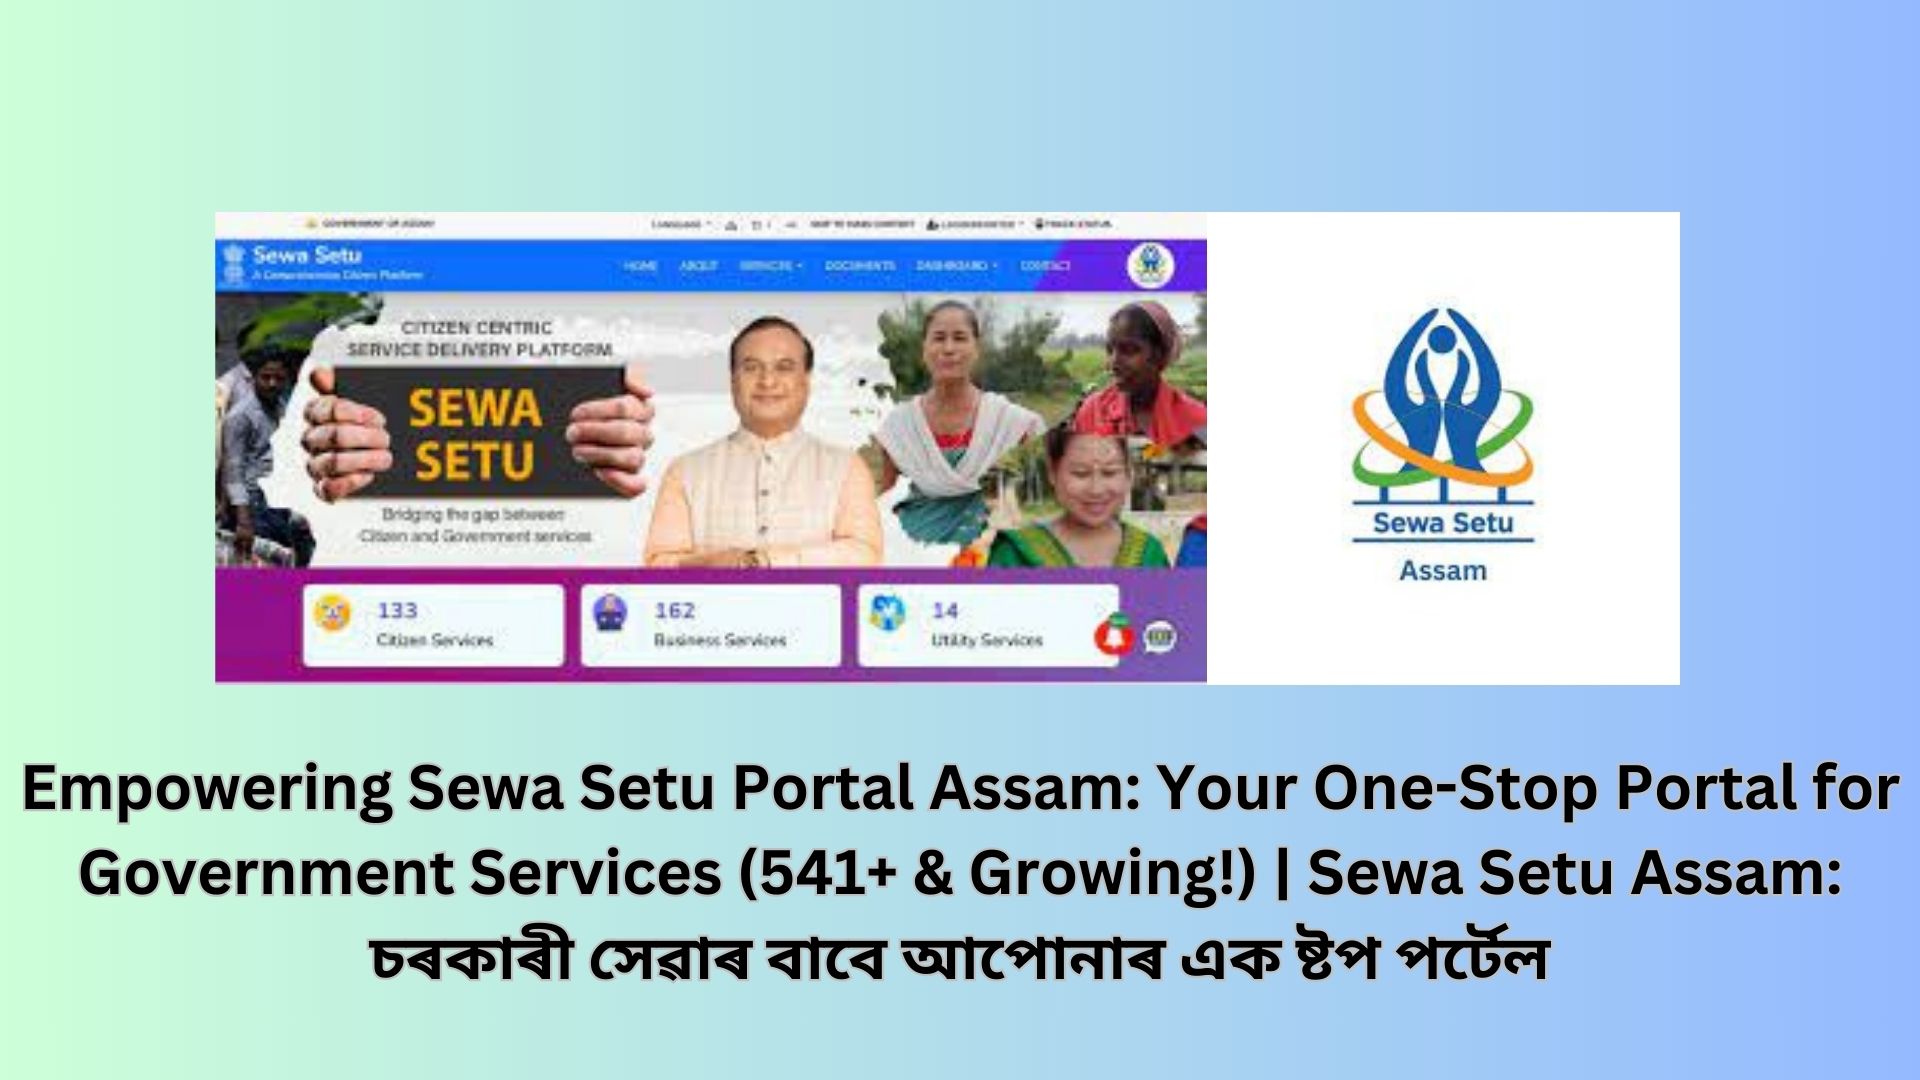 Empowering Sewa Setu Portal Assam: Your One-Stop Portal for Government Services (541+ & Growing!) | Sewa Setu Assam: চৰকাৰী সেৱাৰ বাবে আপোনাৰ এক ষ্টপ পৰ্টেল